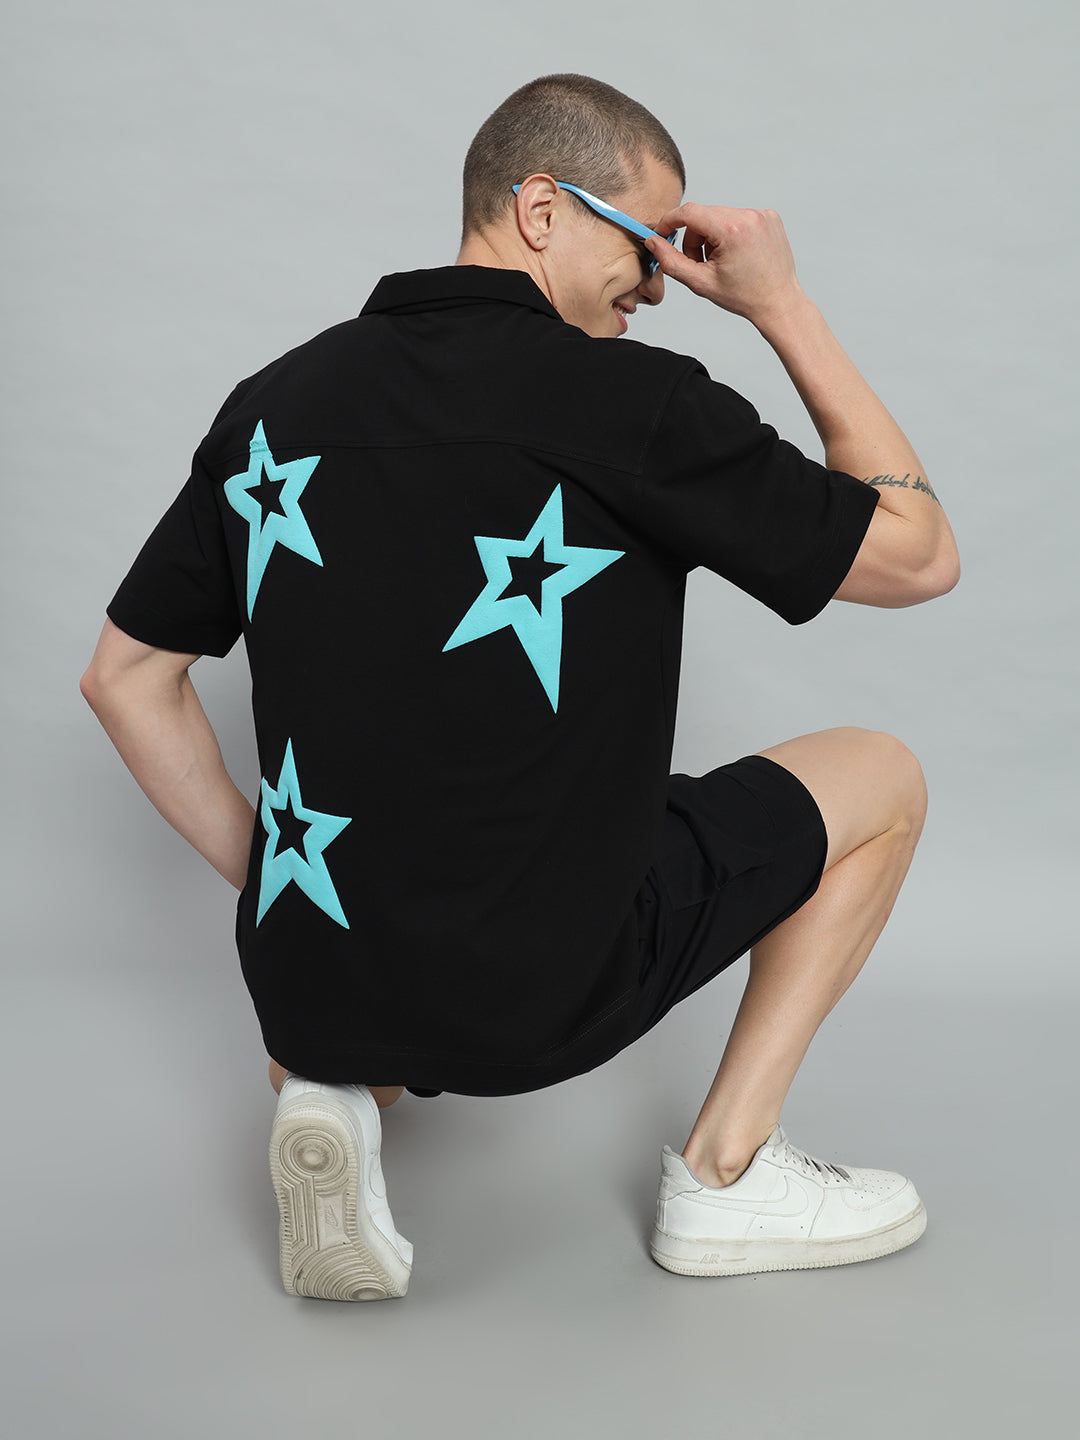 GRIFFEL Star Printed Regular Fit Bowling Shirt